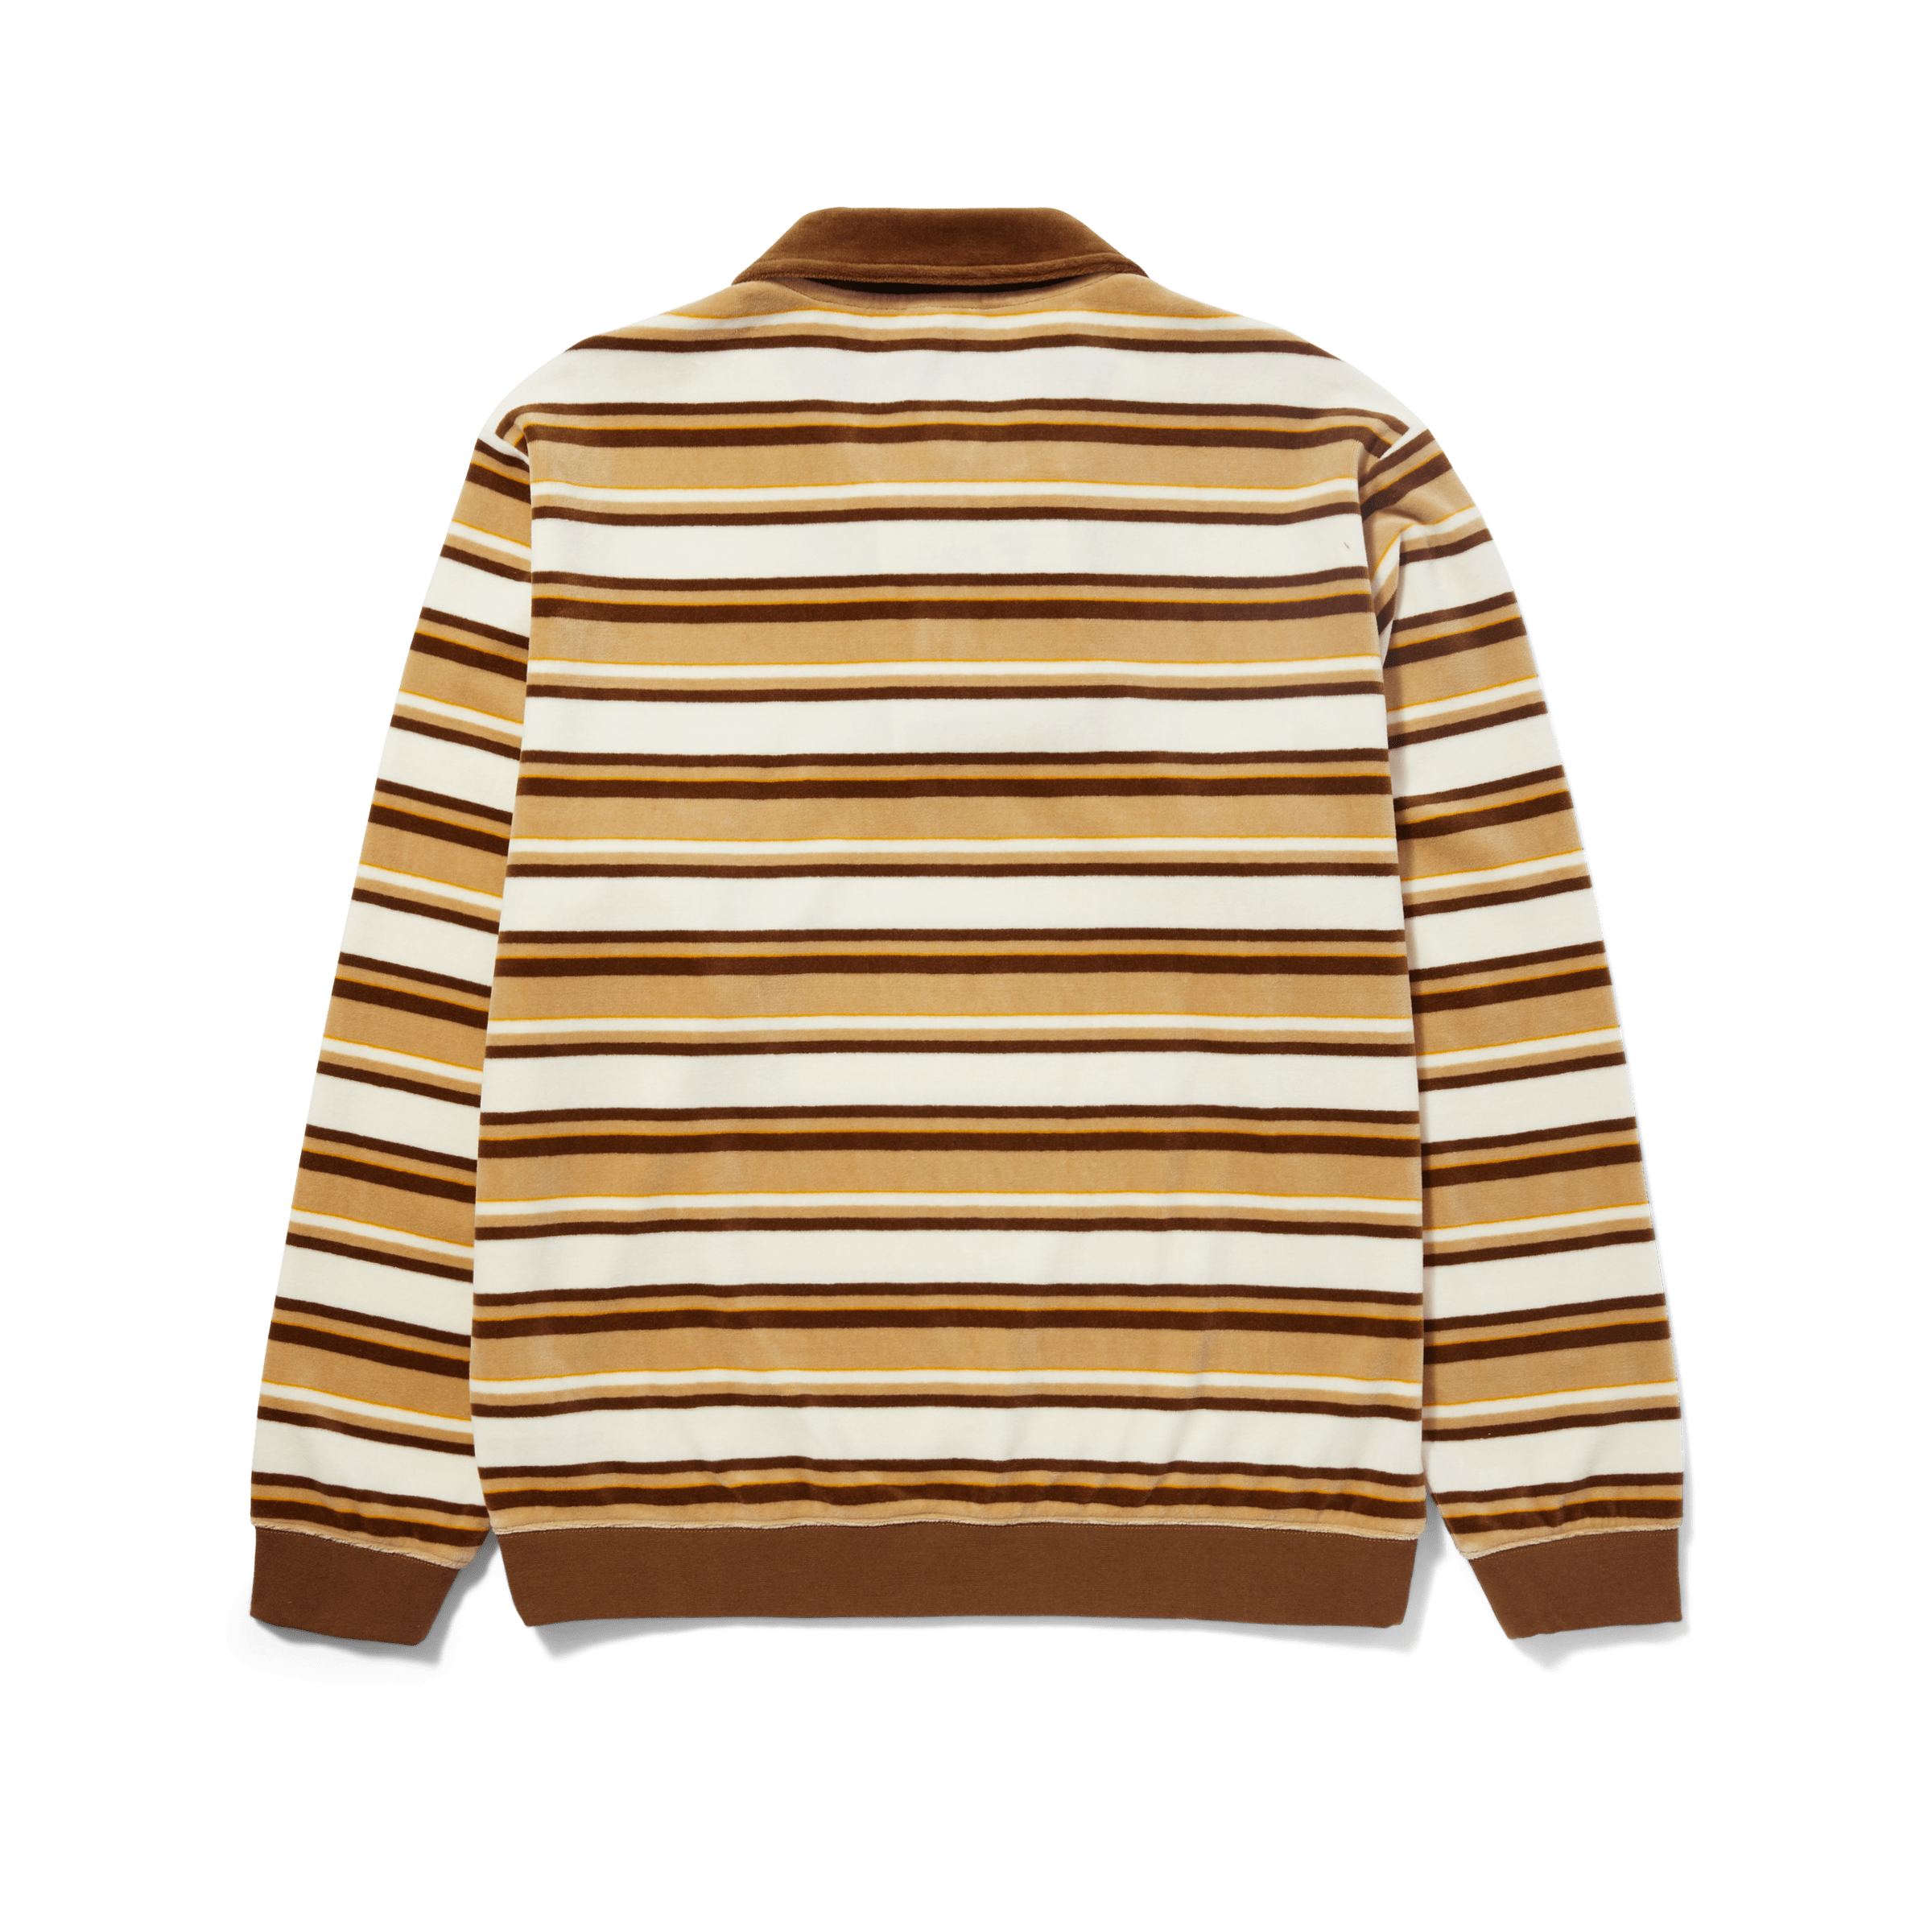 Velour Shirt Worldwide Kramer T-Shirt HUF Long – Sleeve